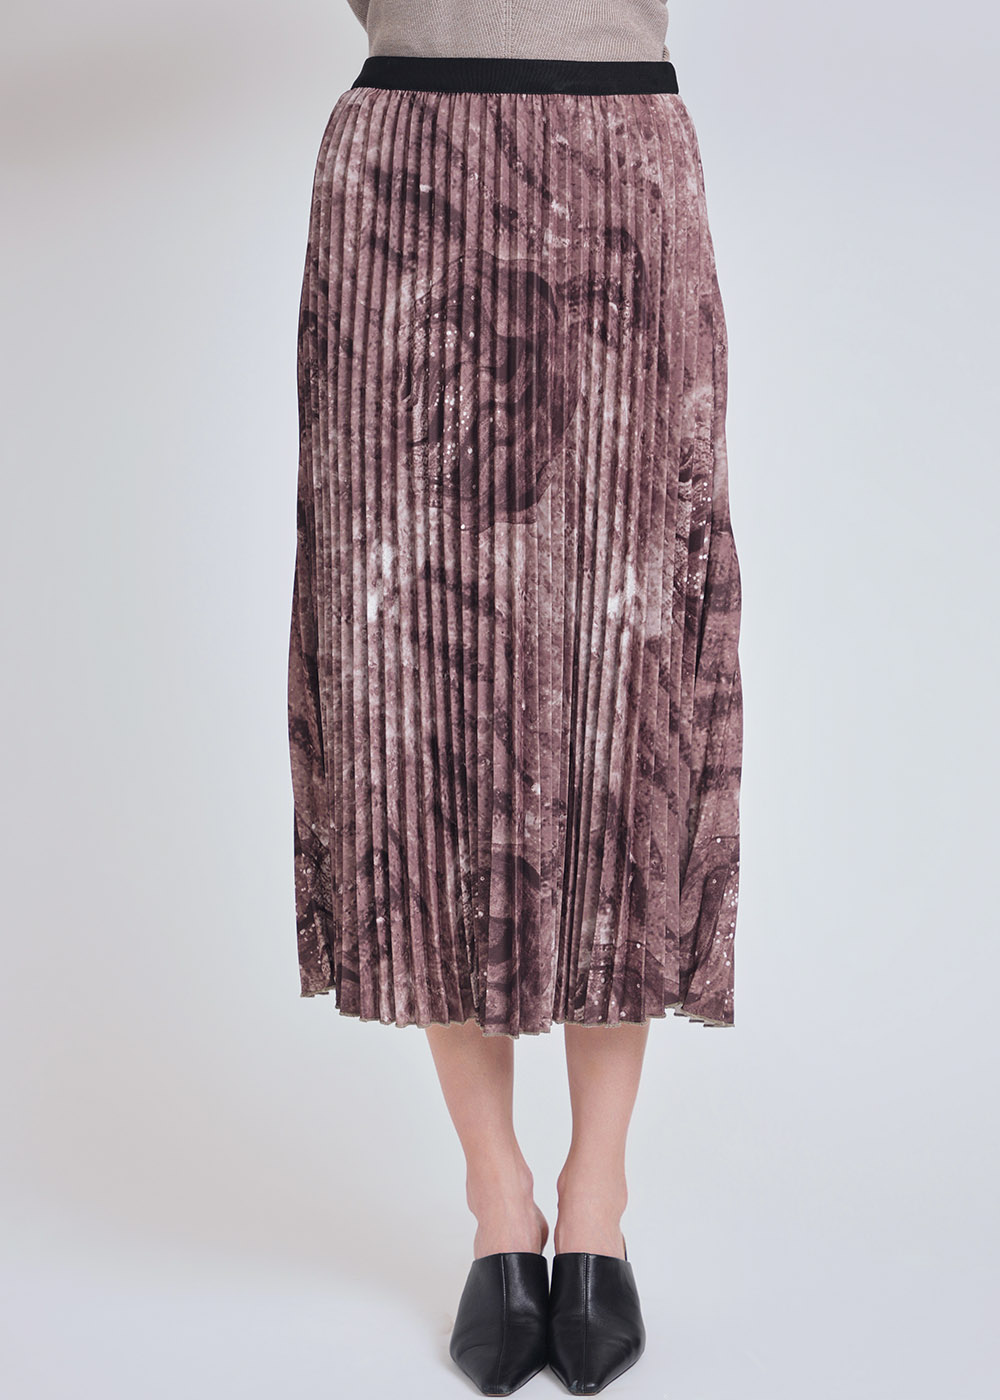 Artistic Ambiance Brown Midi Skirt